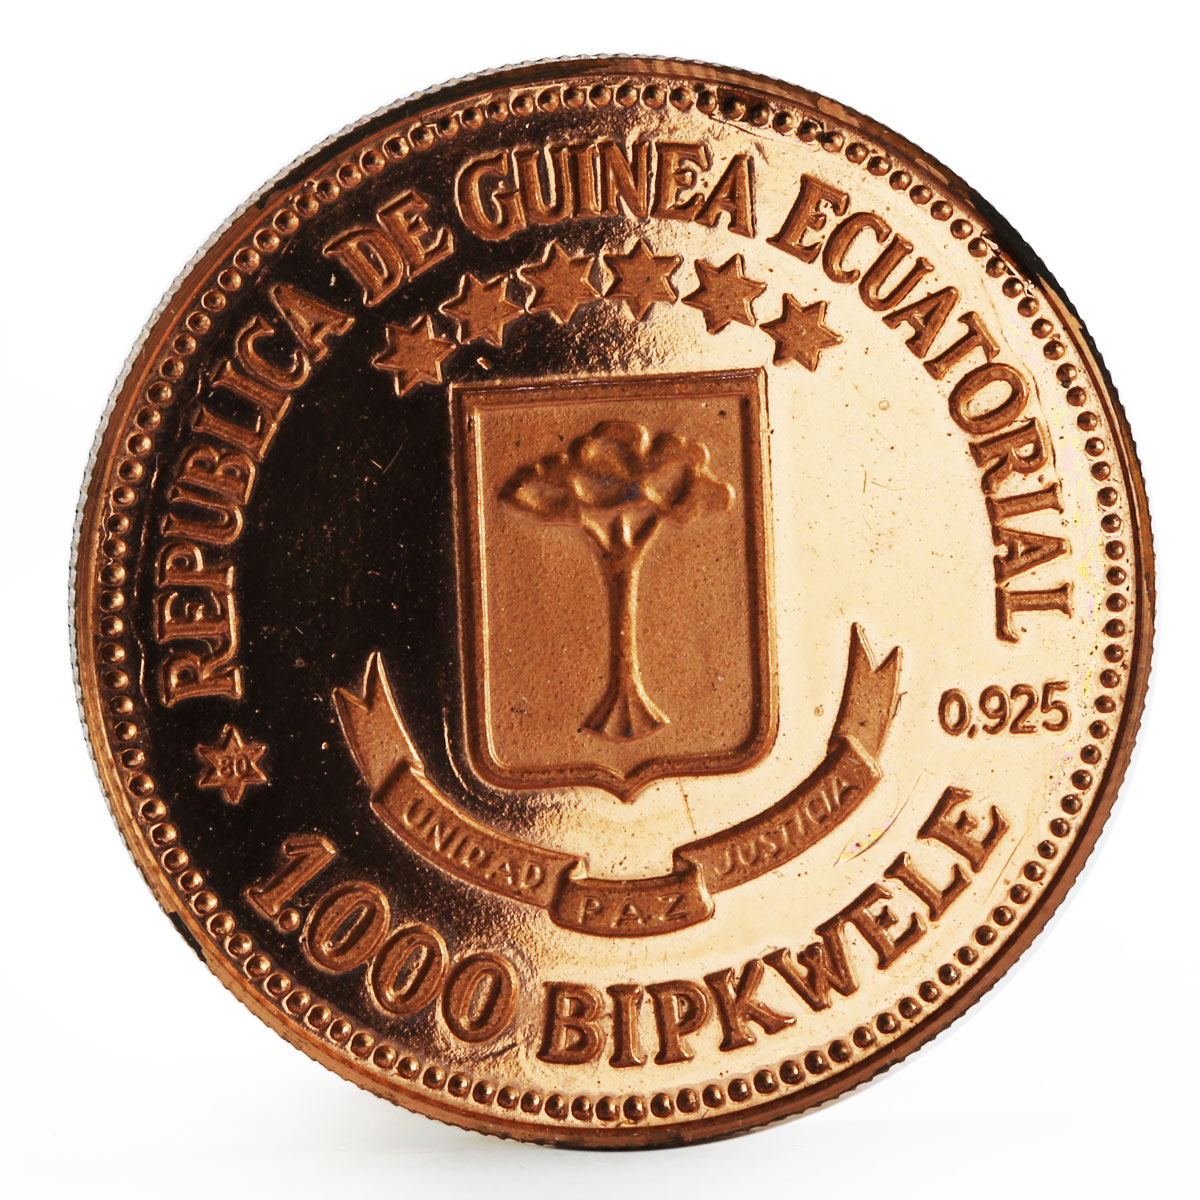 Equatorial Guinea 1000 bipkwele Prueba proof copper coin 1978